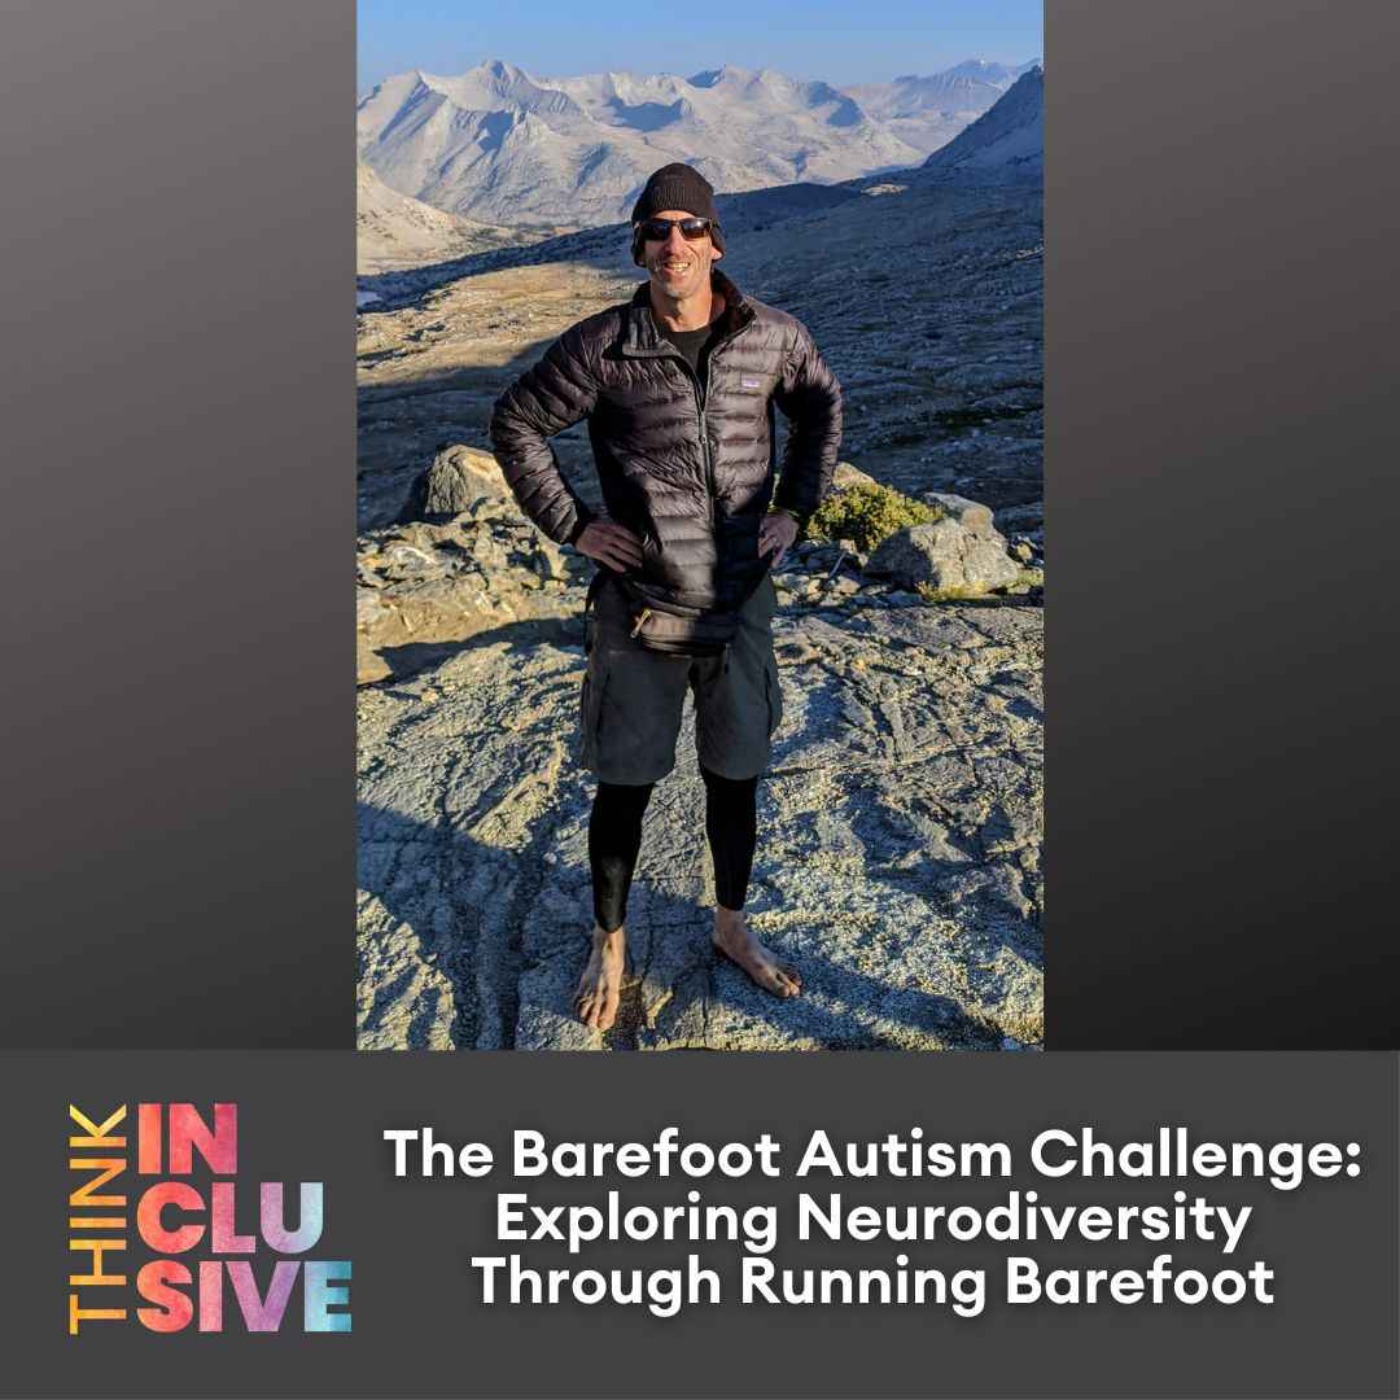 The Barefoot Autism Challenge: Exploring Neurodiversity Through Running Barefoot